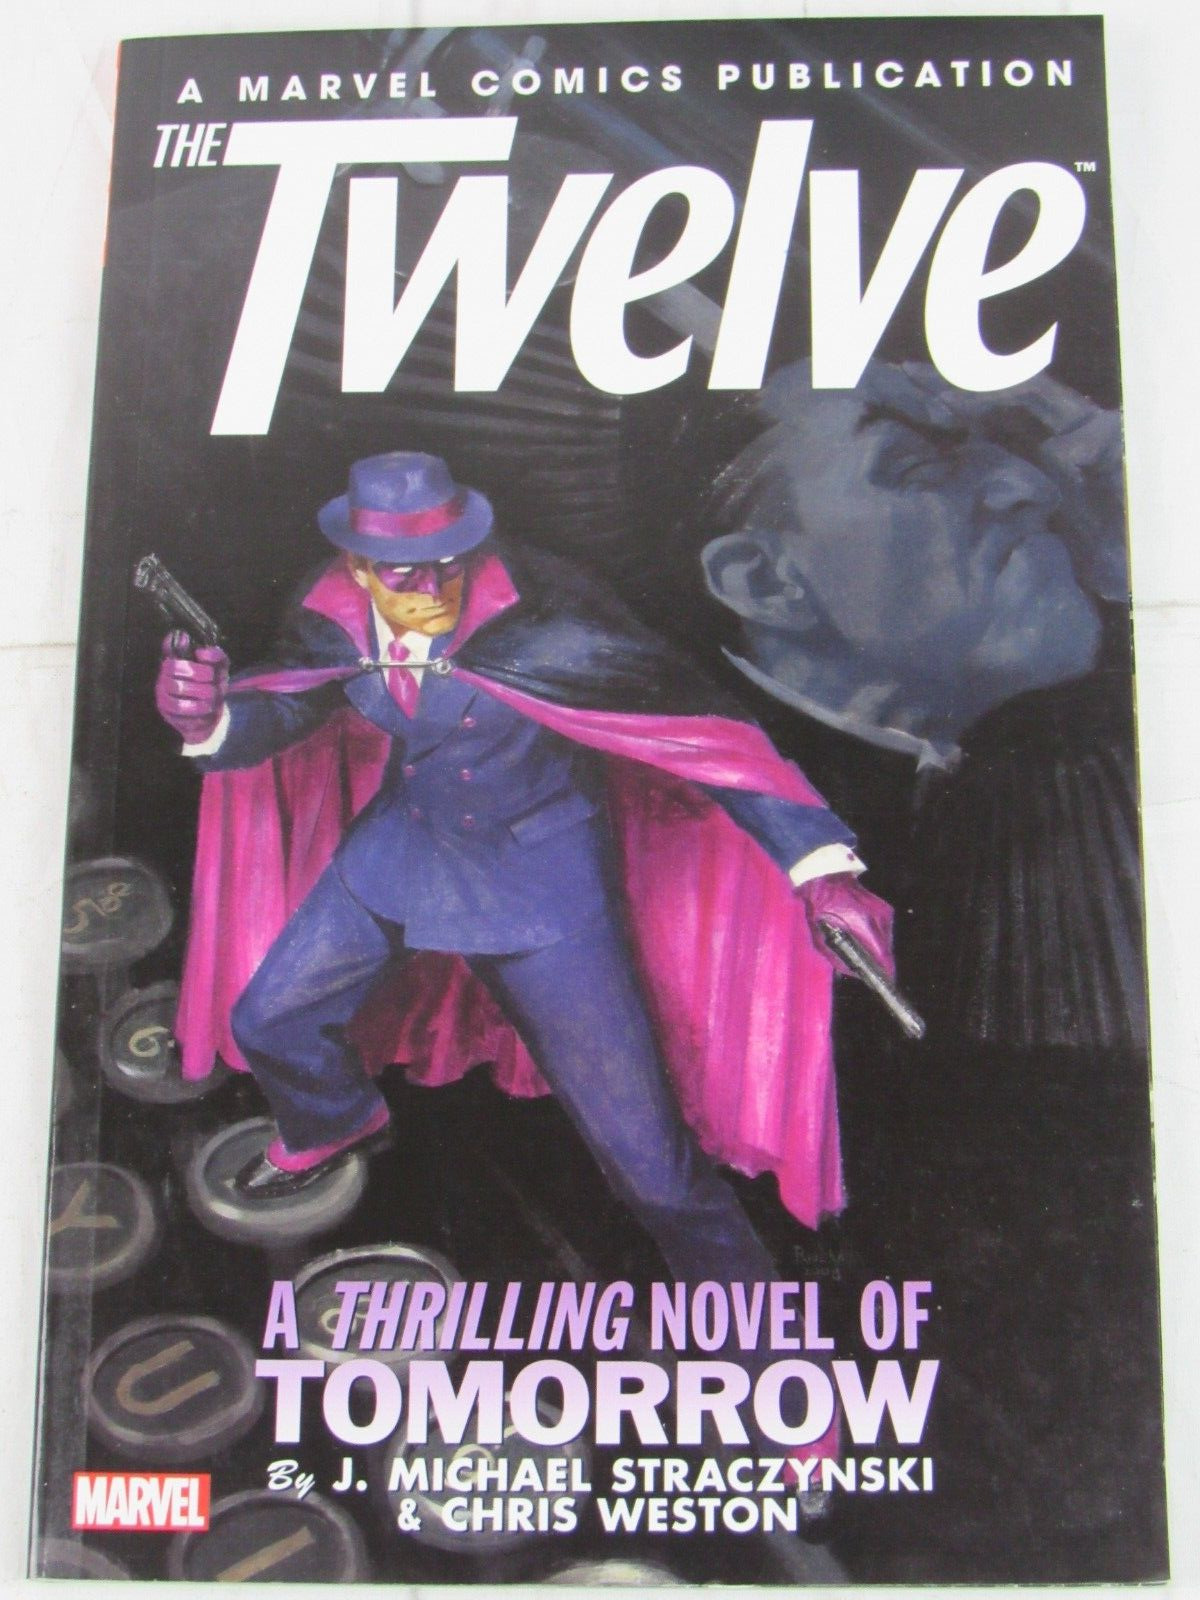 The Twelve #2 Oct. 2012 Marvel Comics TPB